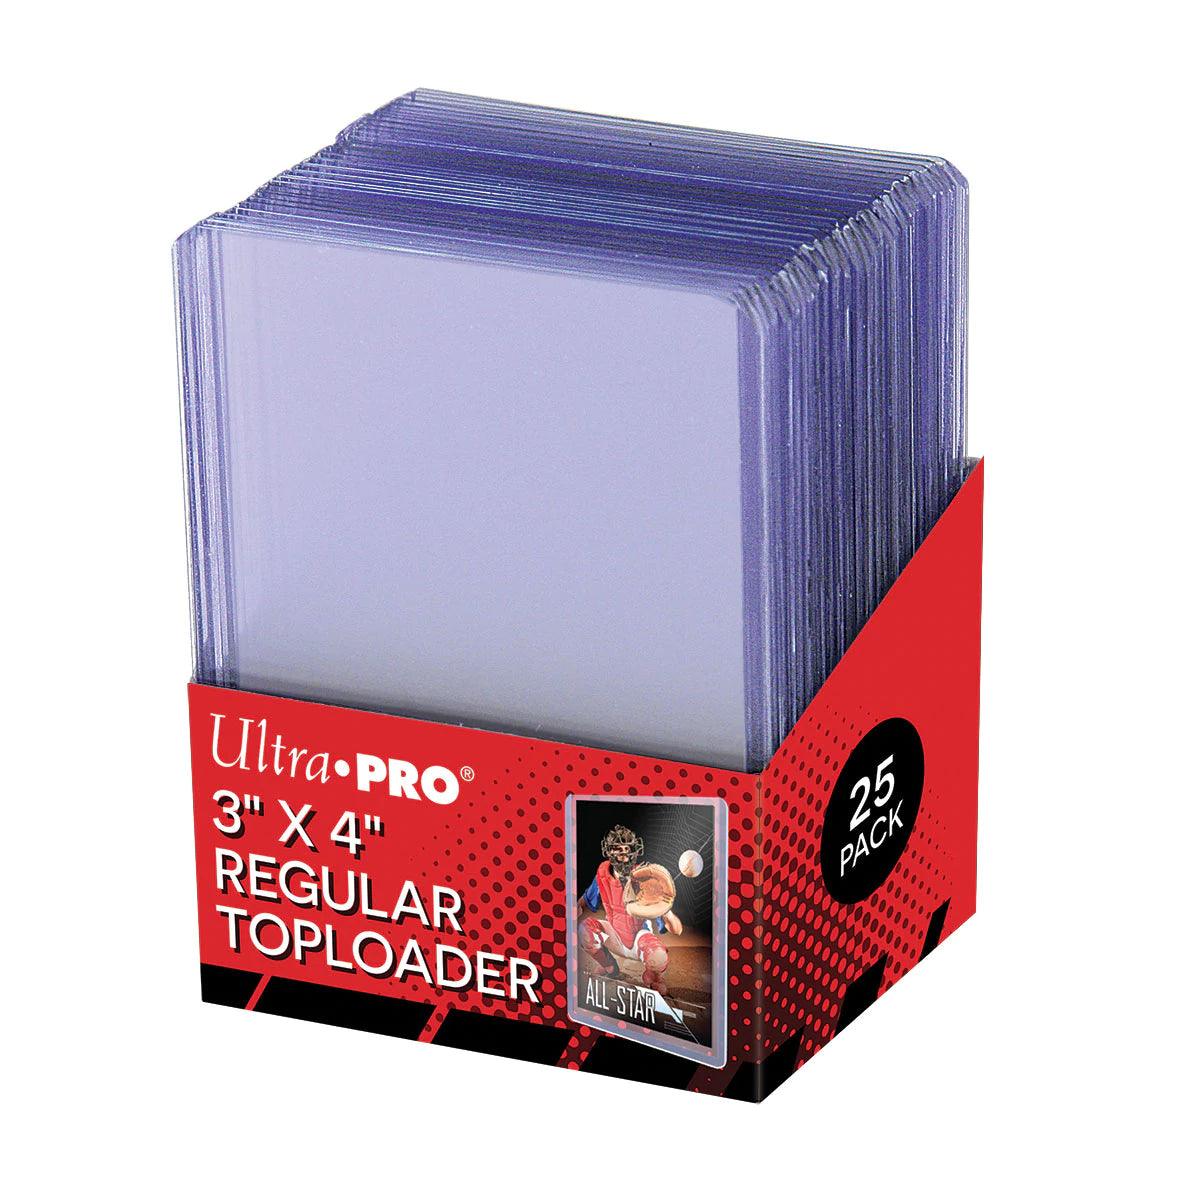 Ultra PRO - Toploader Pack - 035pt Regular (25 toploaders per pack) - Hobby Champion Inc